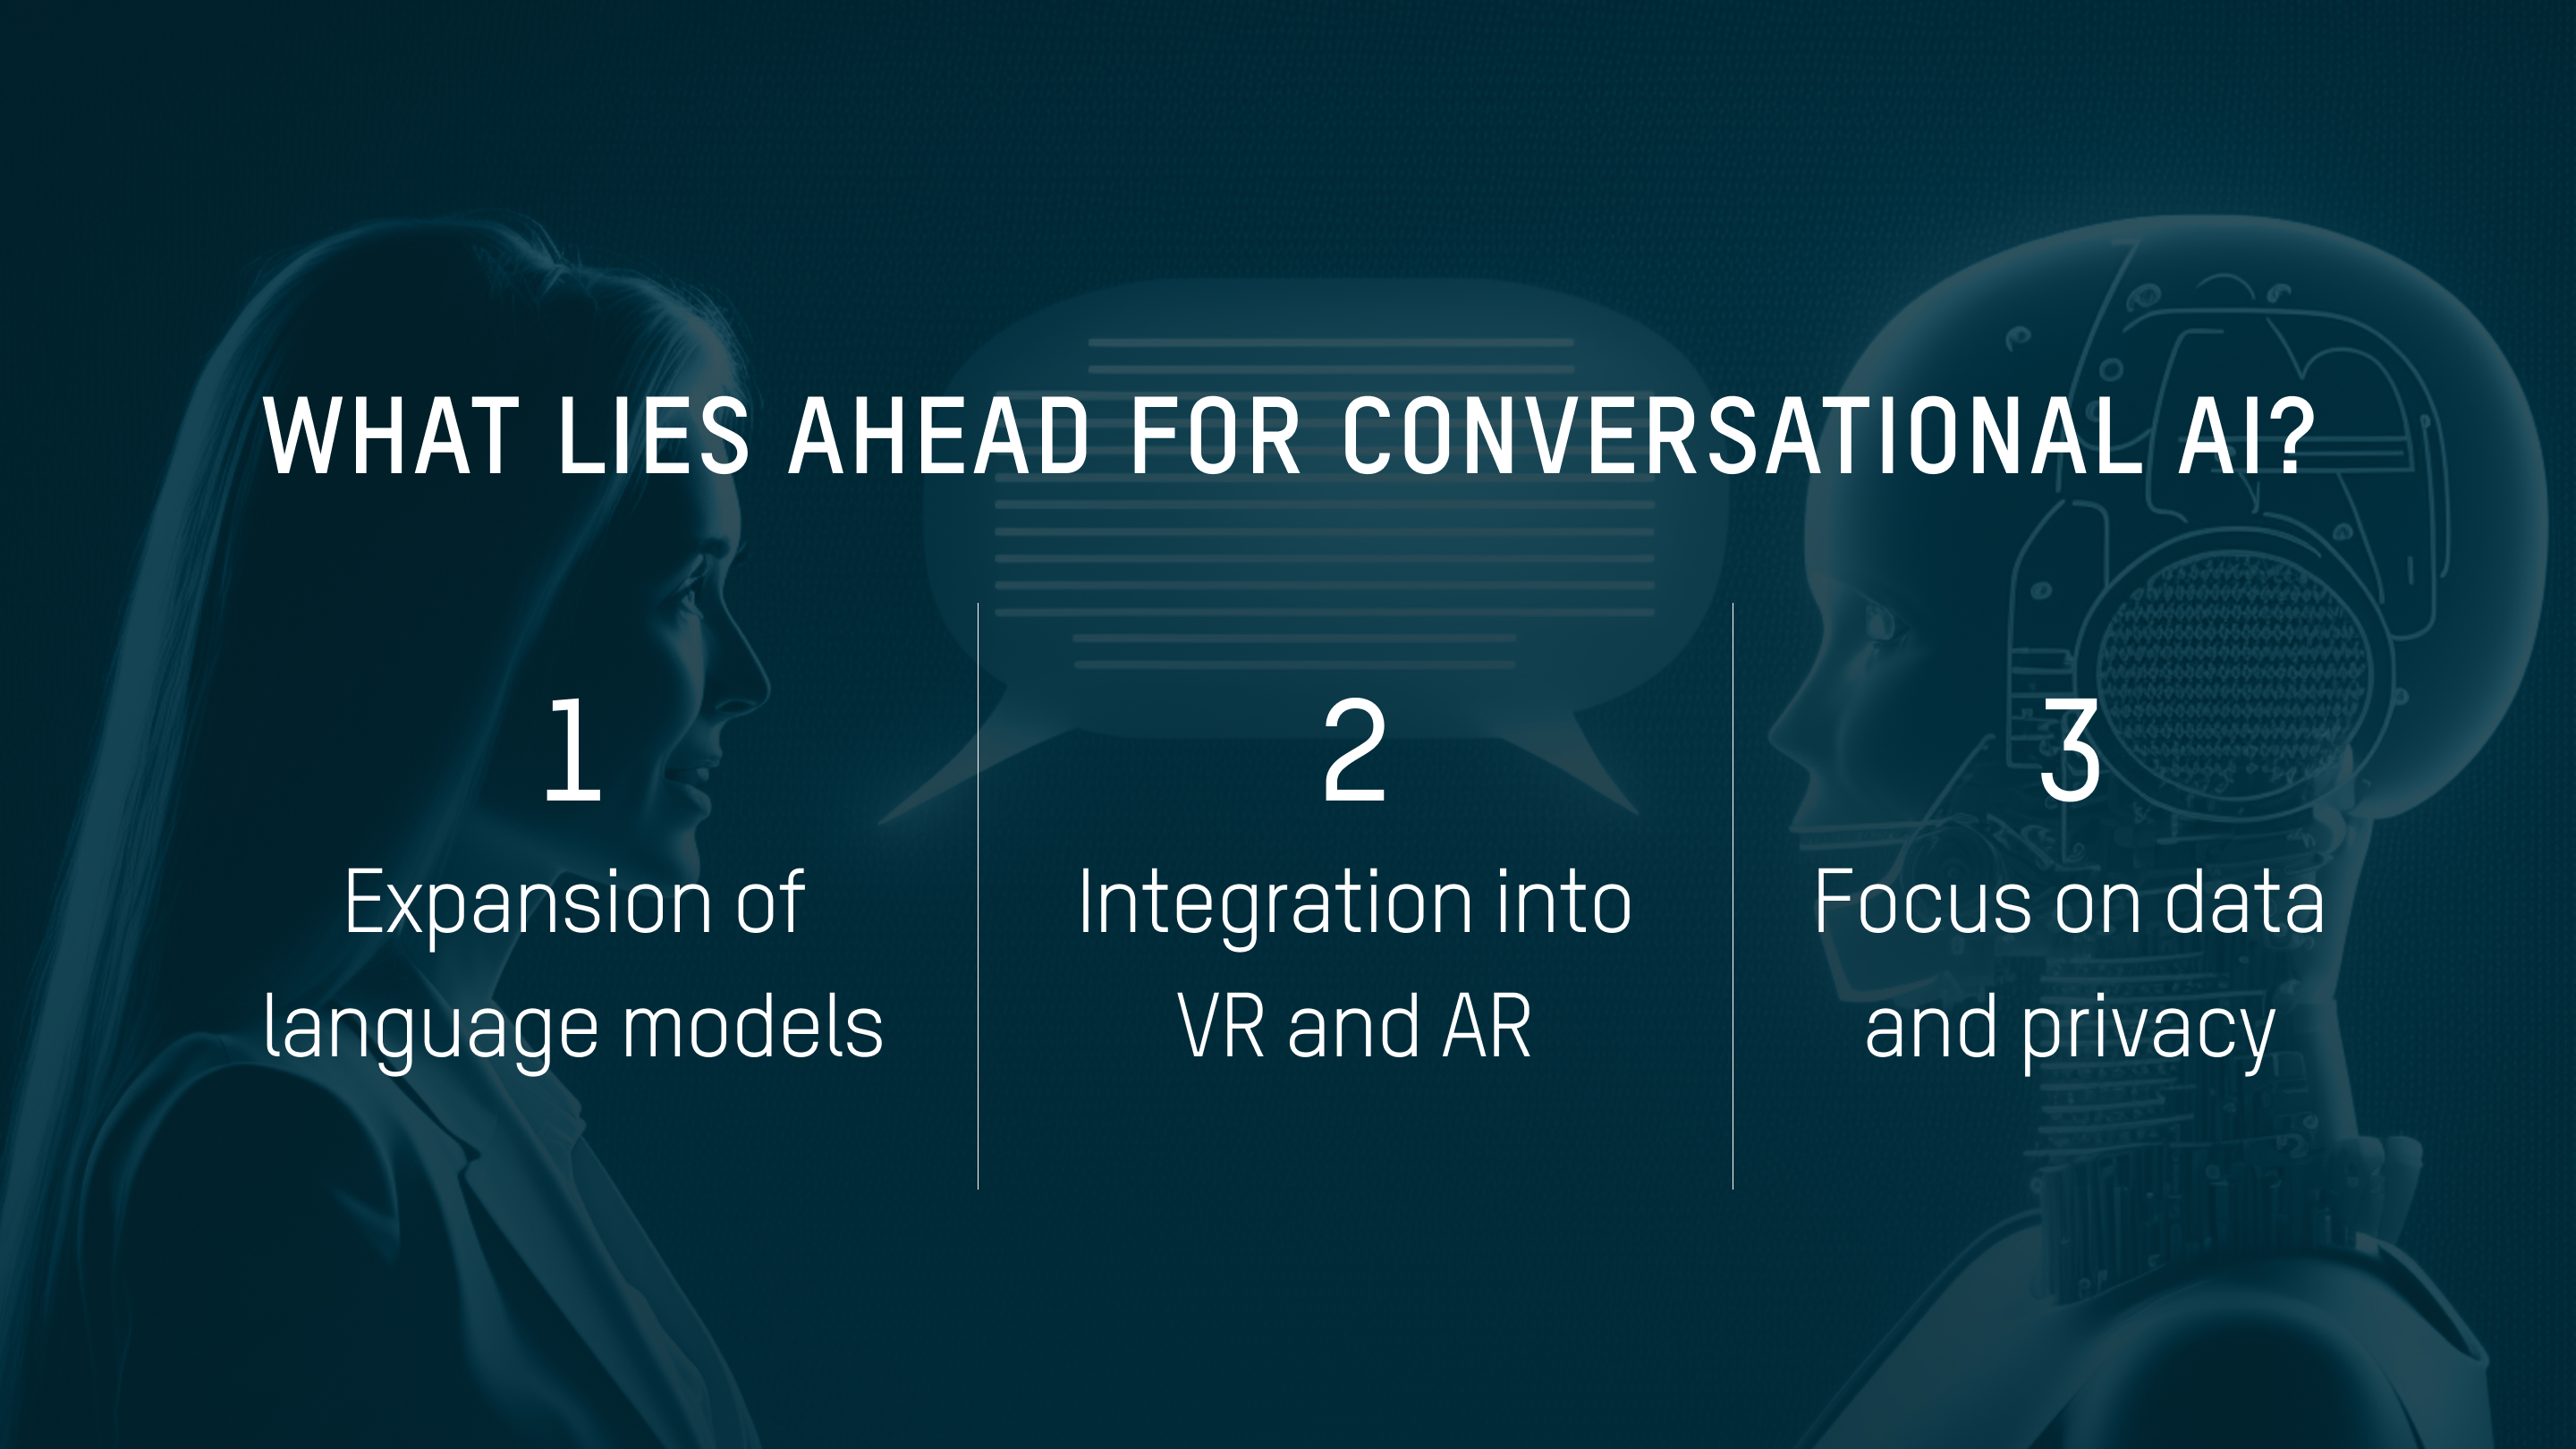 What lies ahead for conversational AI?